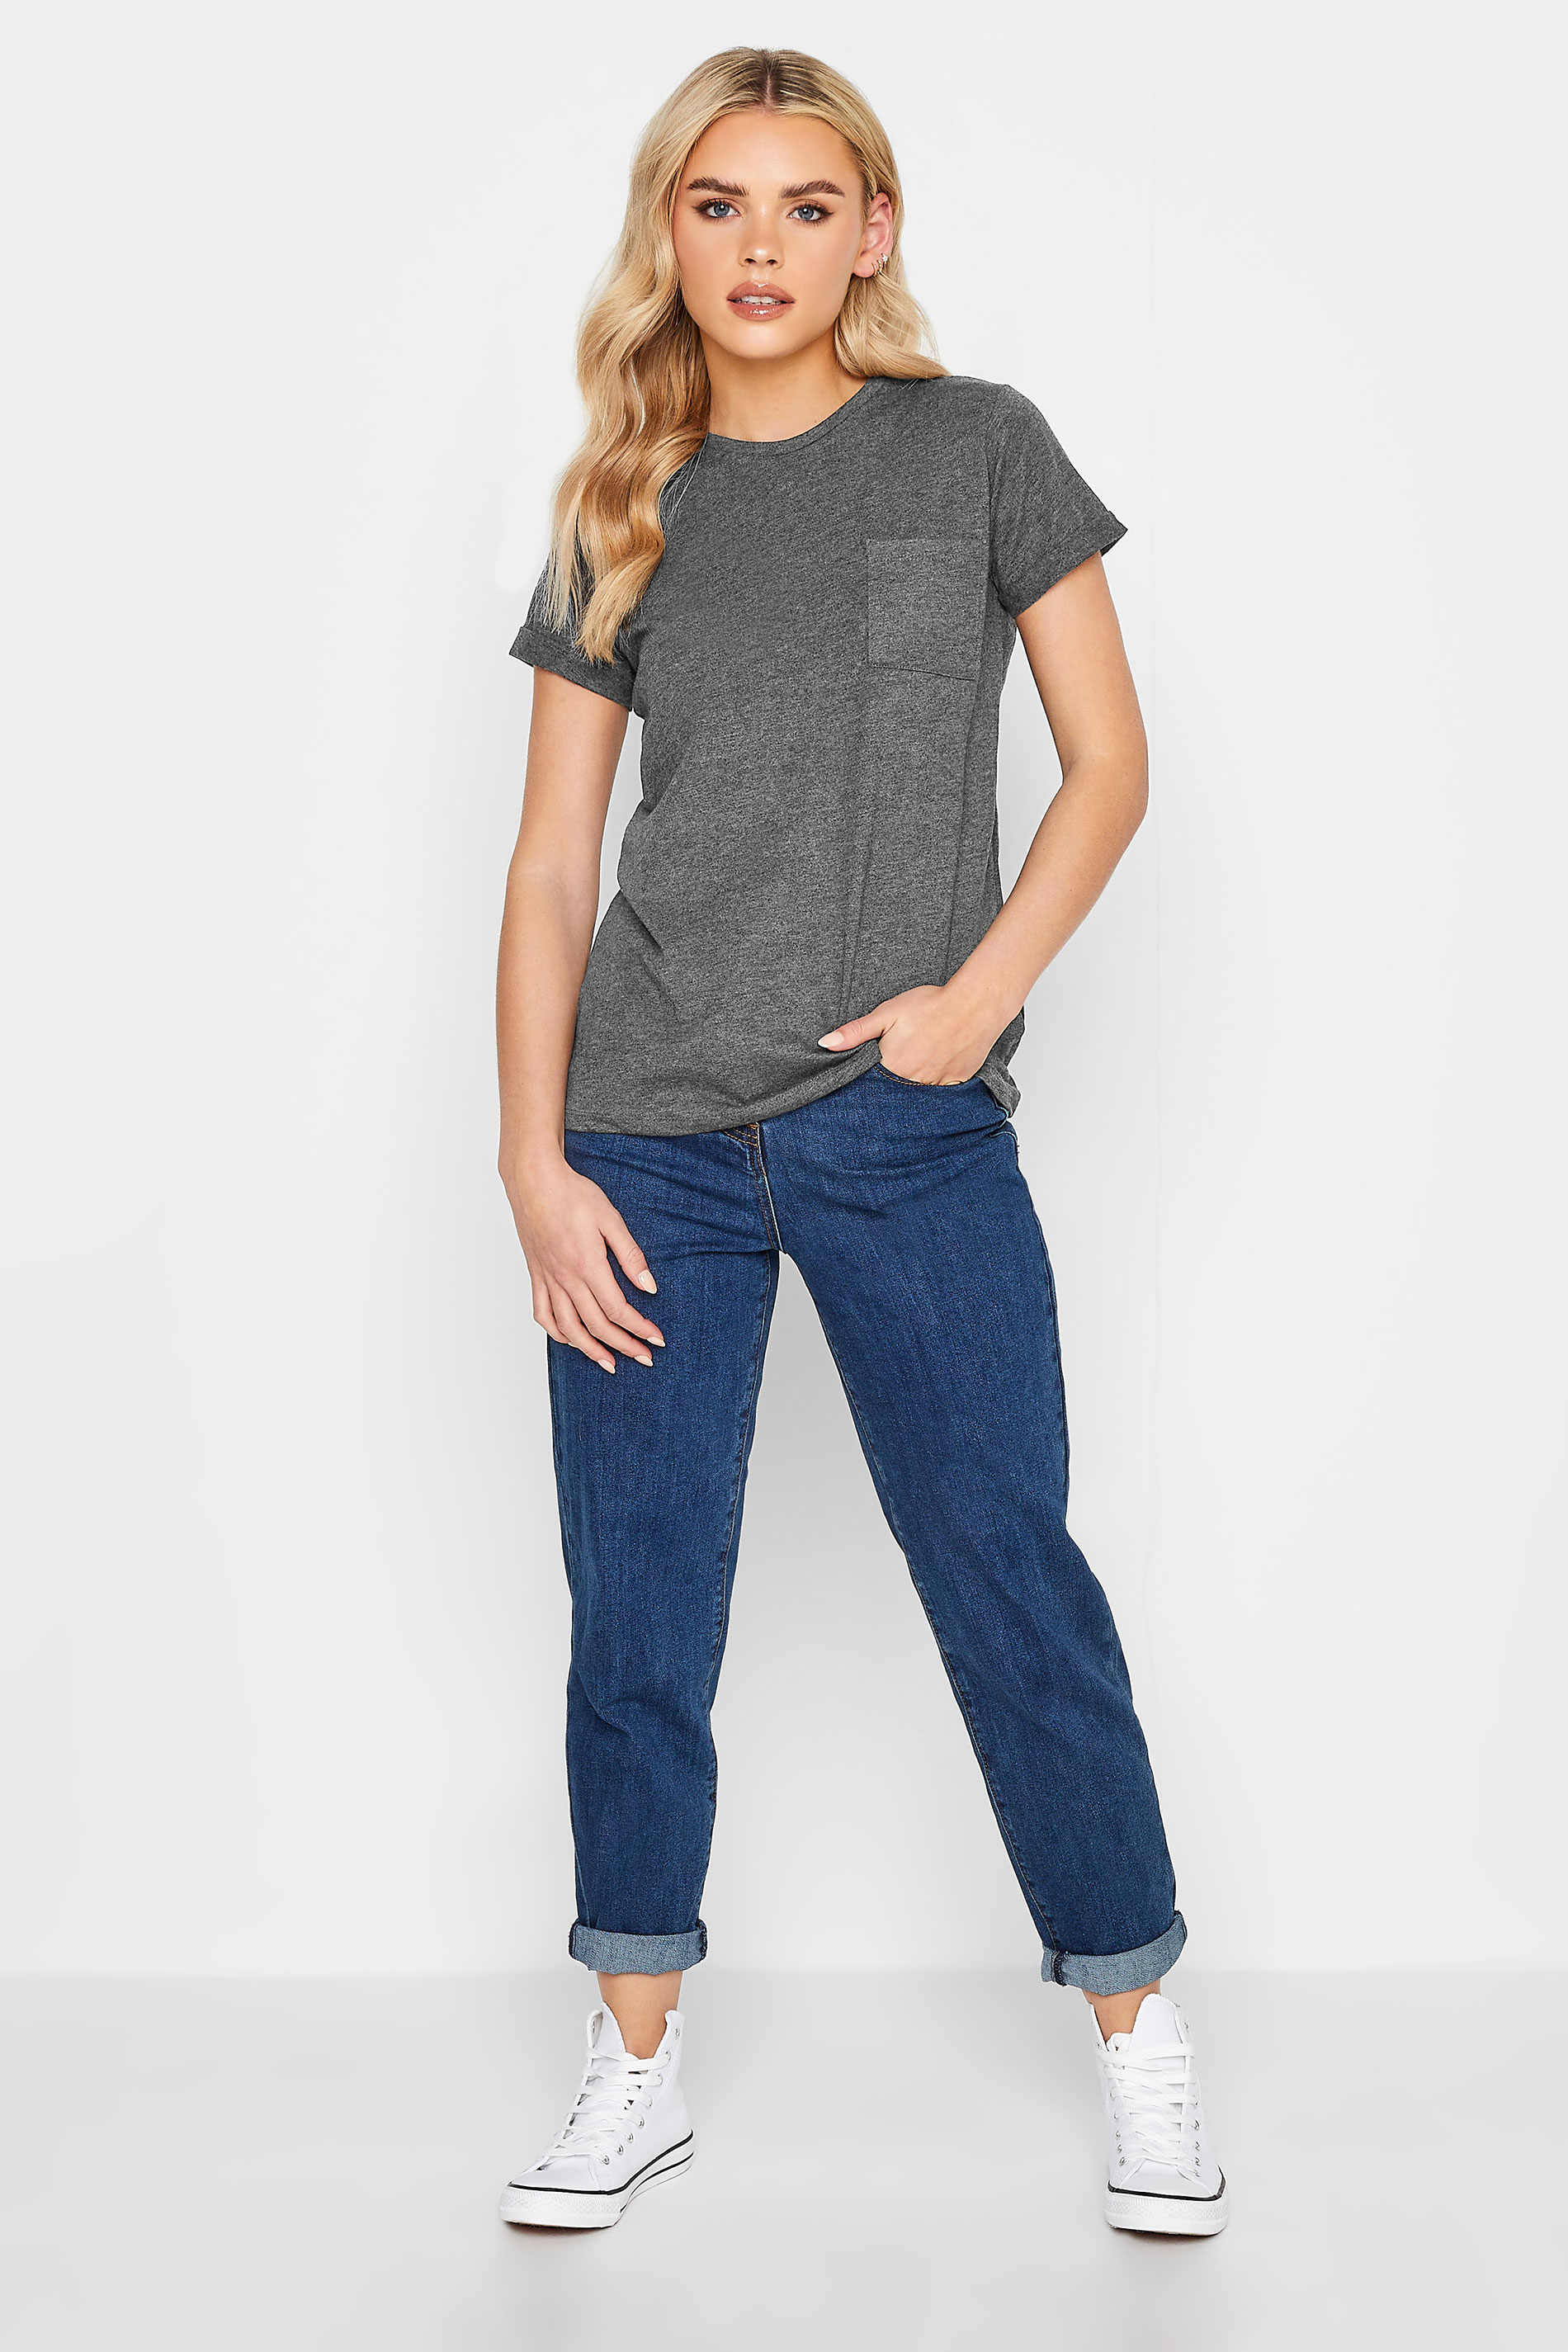 Petite Grey Short Sleeve Pocket T-Shirt | PixieGirl  2